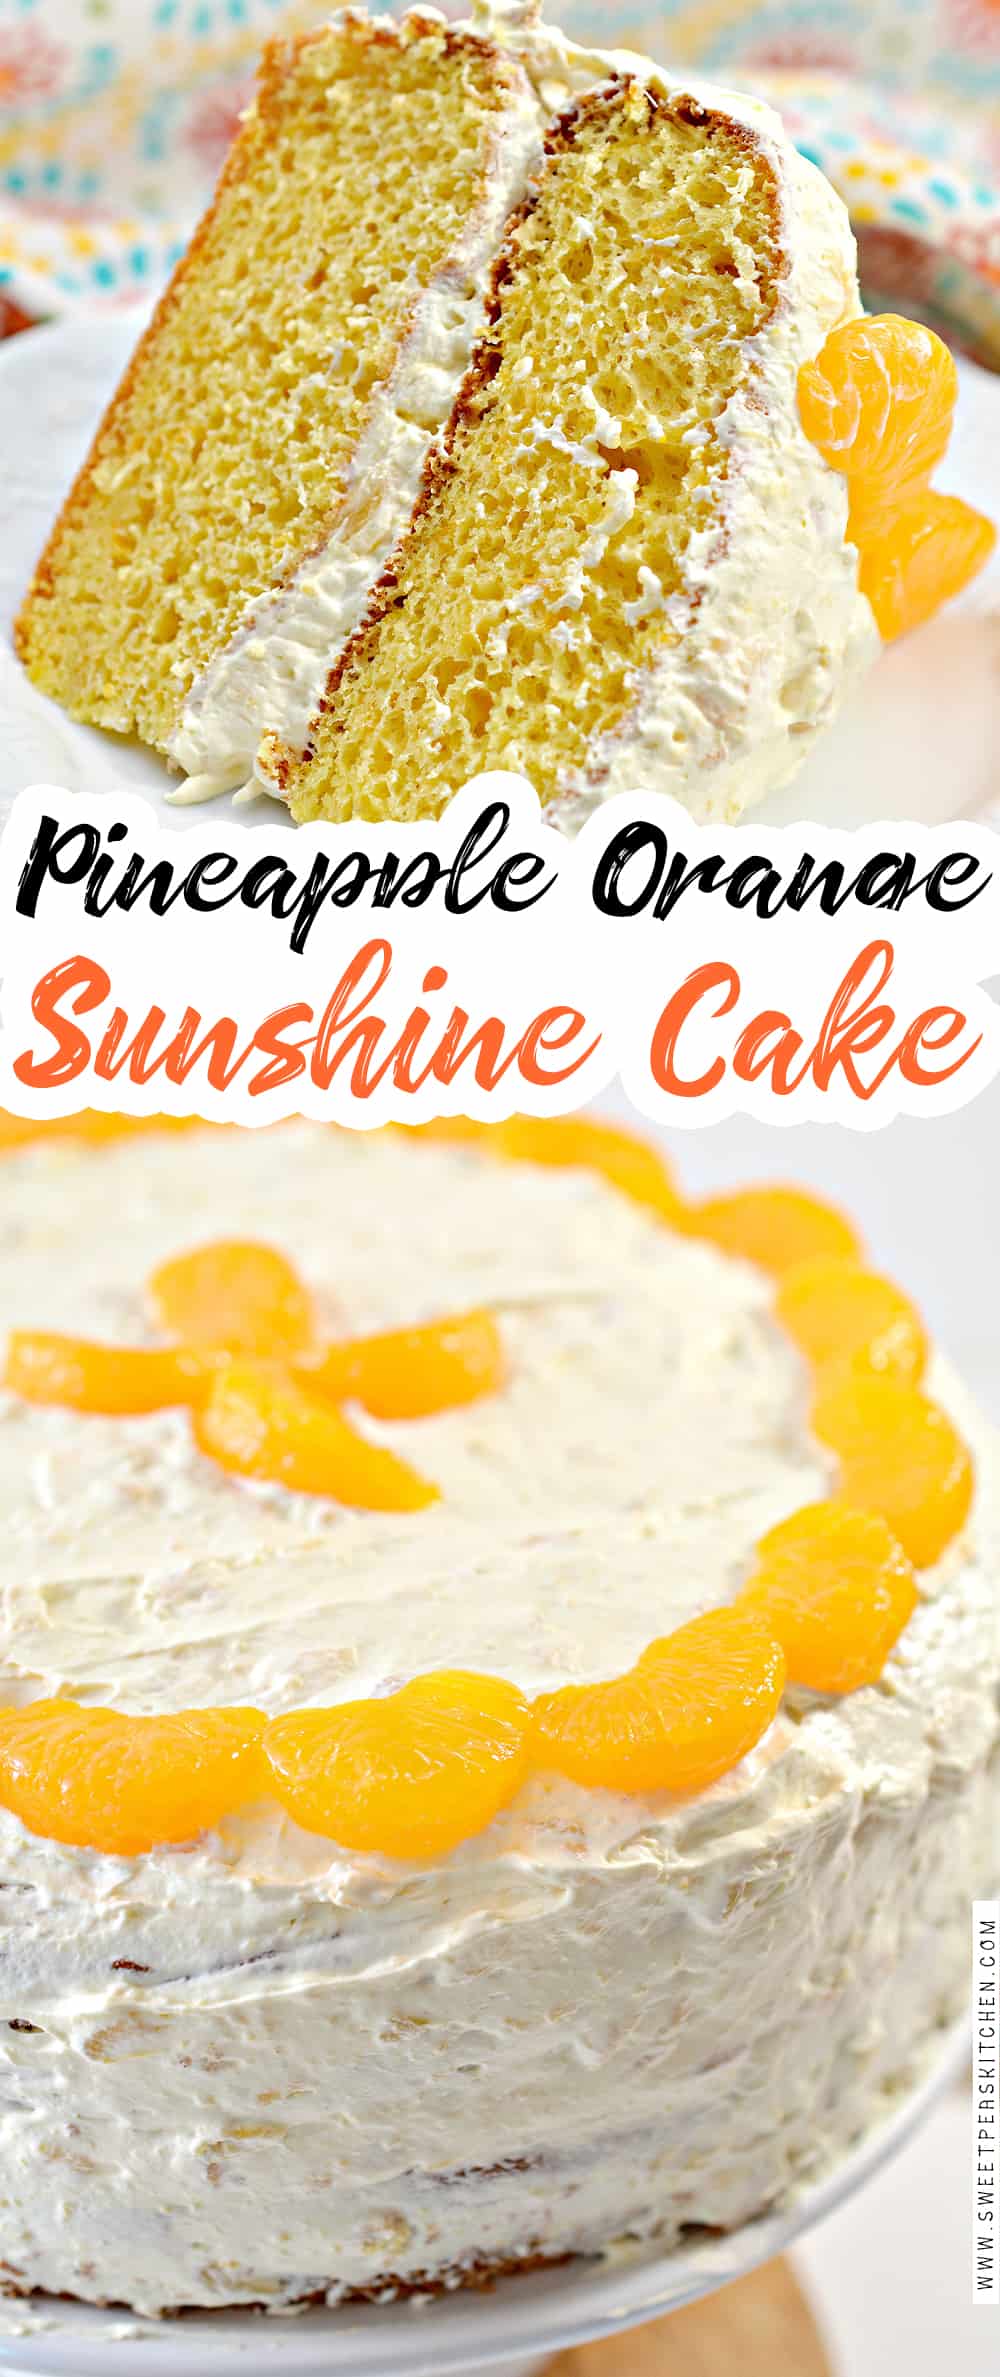 Pineapple Orange Sunshine Cake on pinterest